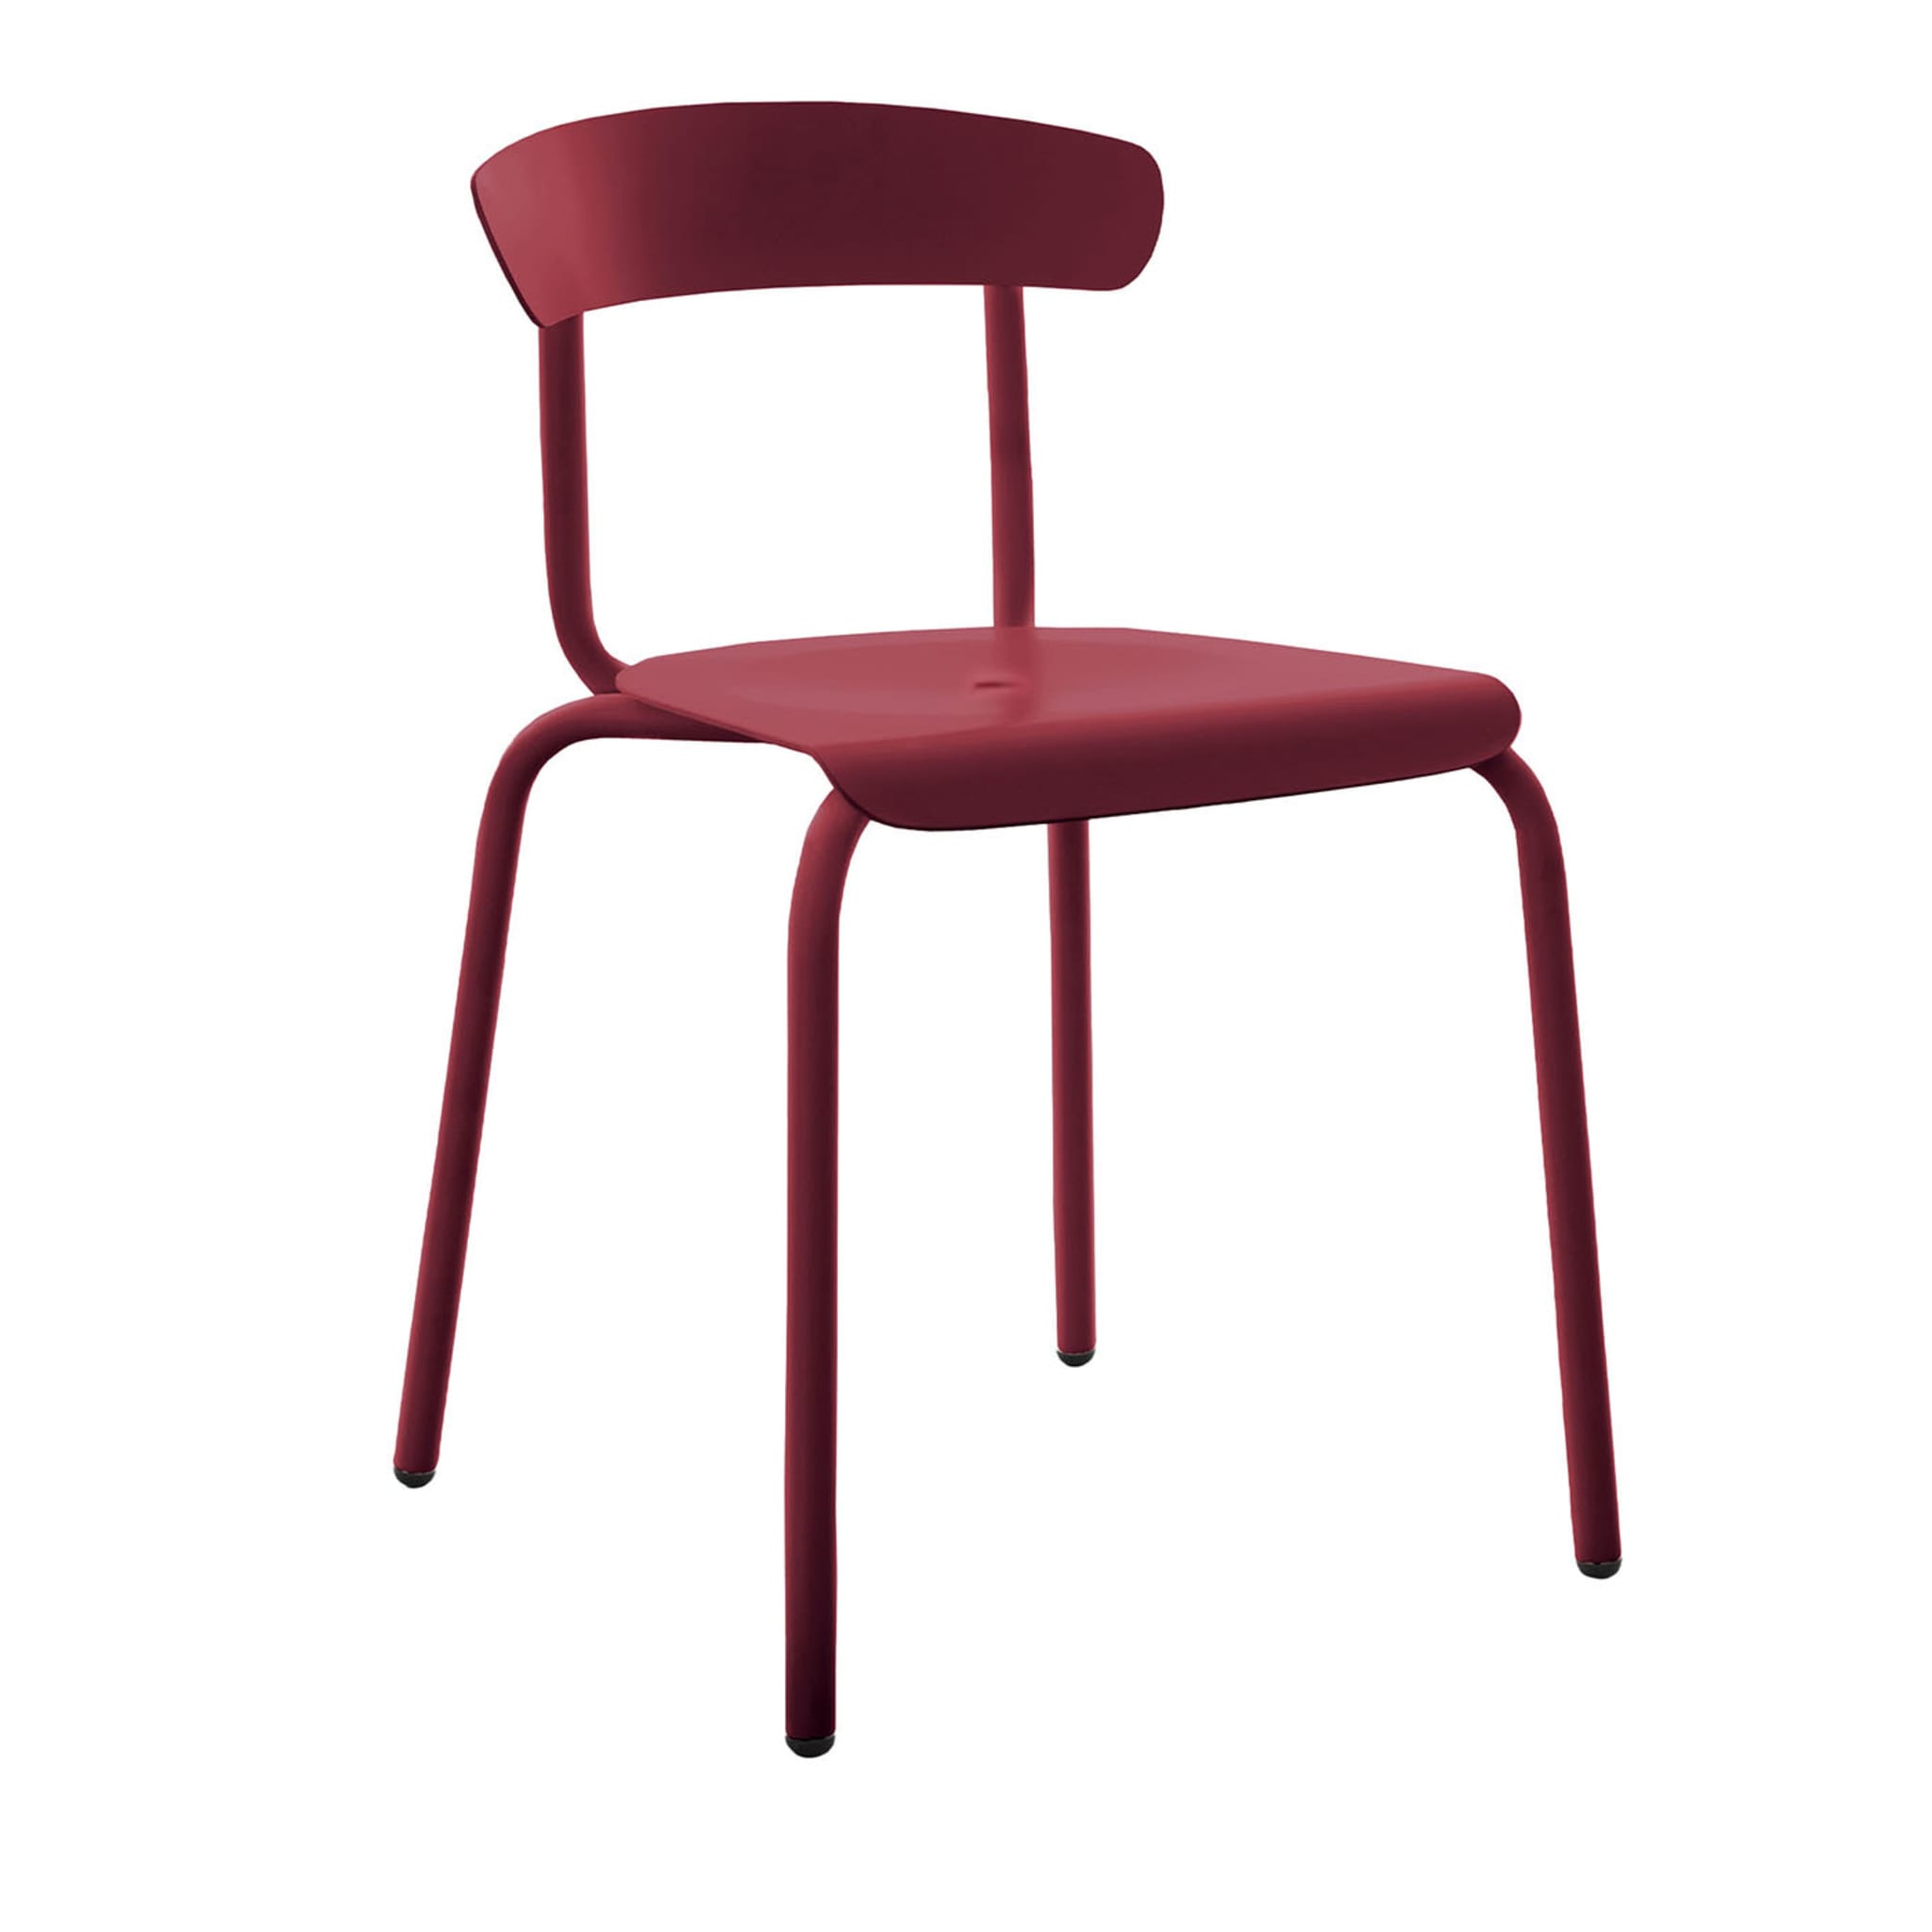 Roter AluMito-Stuhl mit Armlehnen von Pascal Bosetti - Hauptansicht